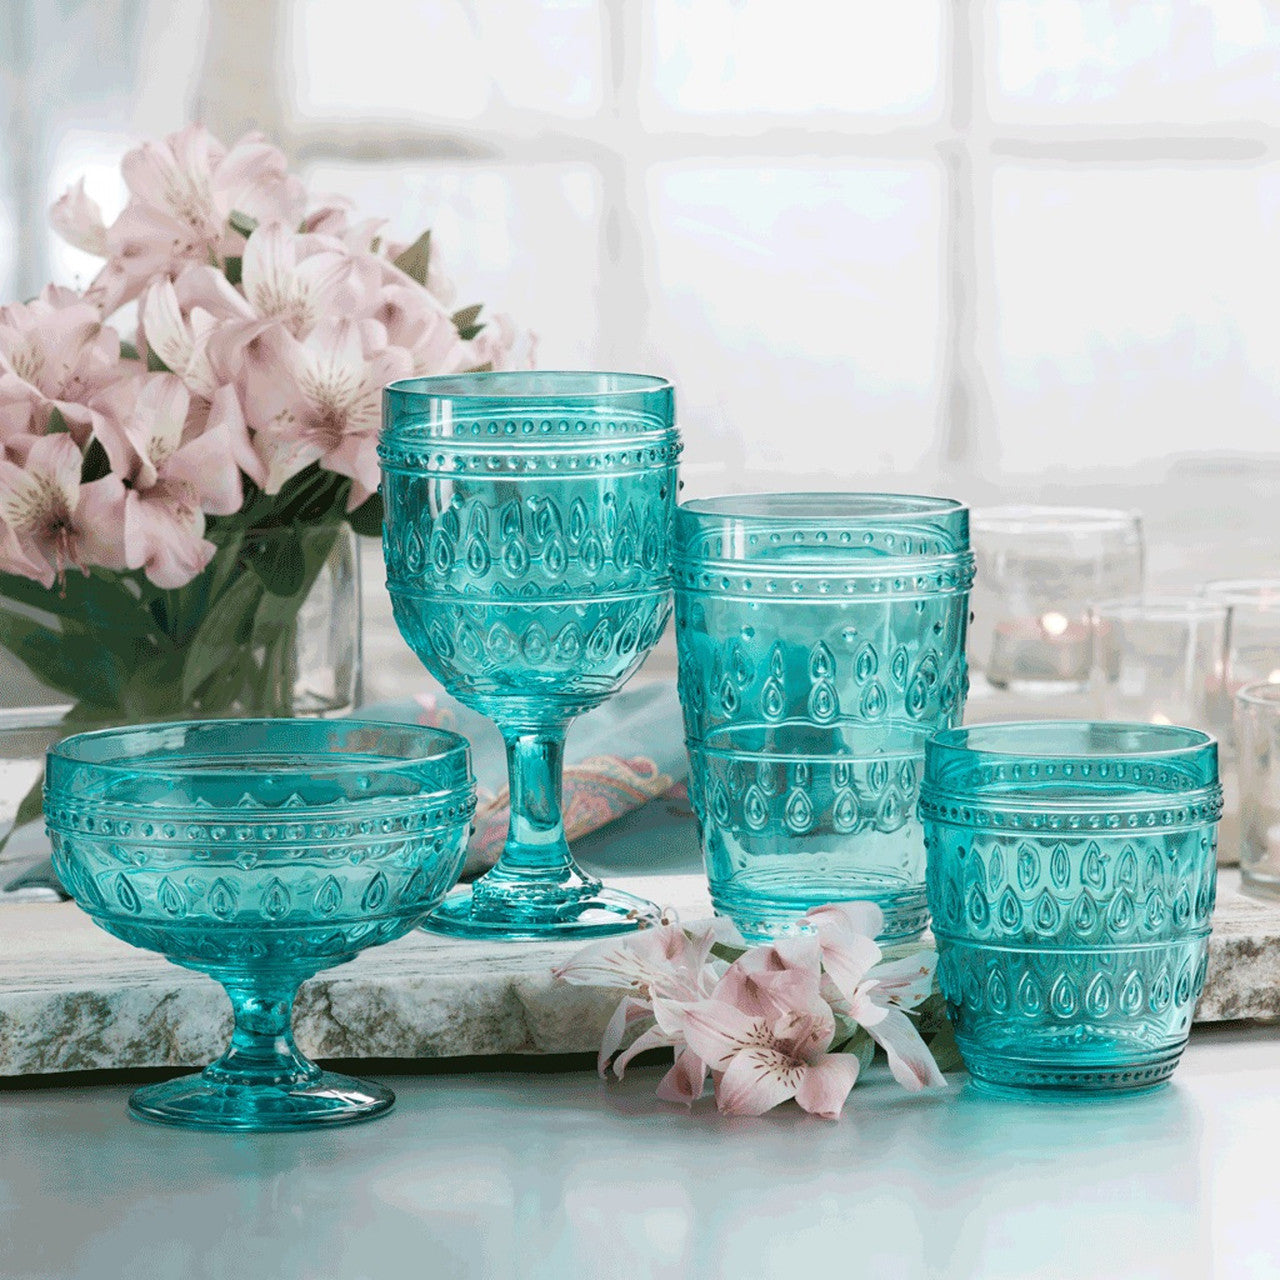 Fez Glassware 4 Piece 14oz Highball Glass Set in Turquoise - Euro Ceramica 